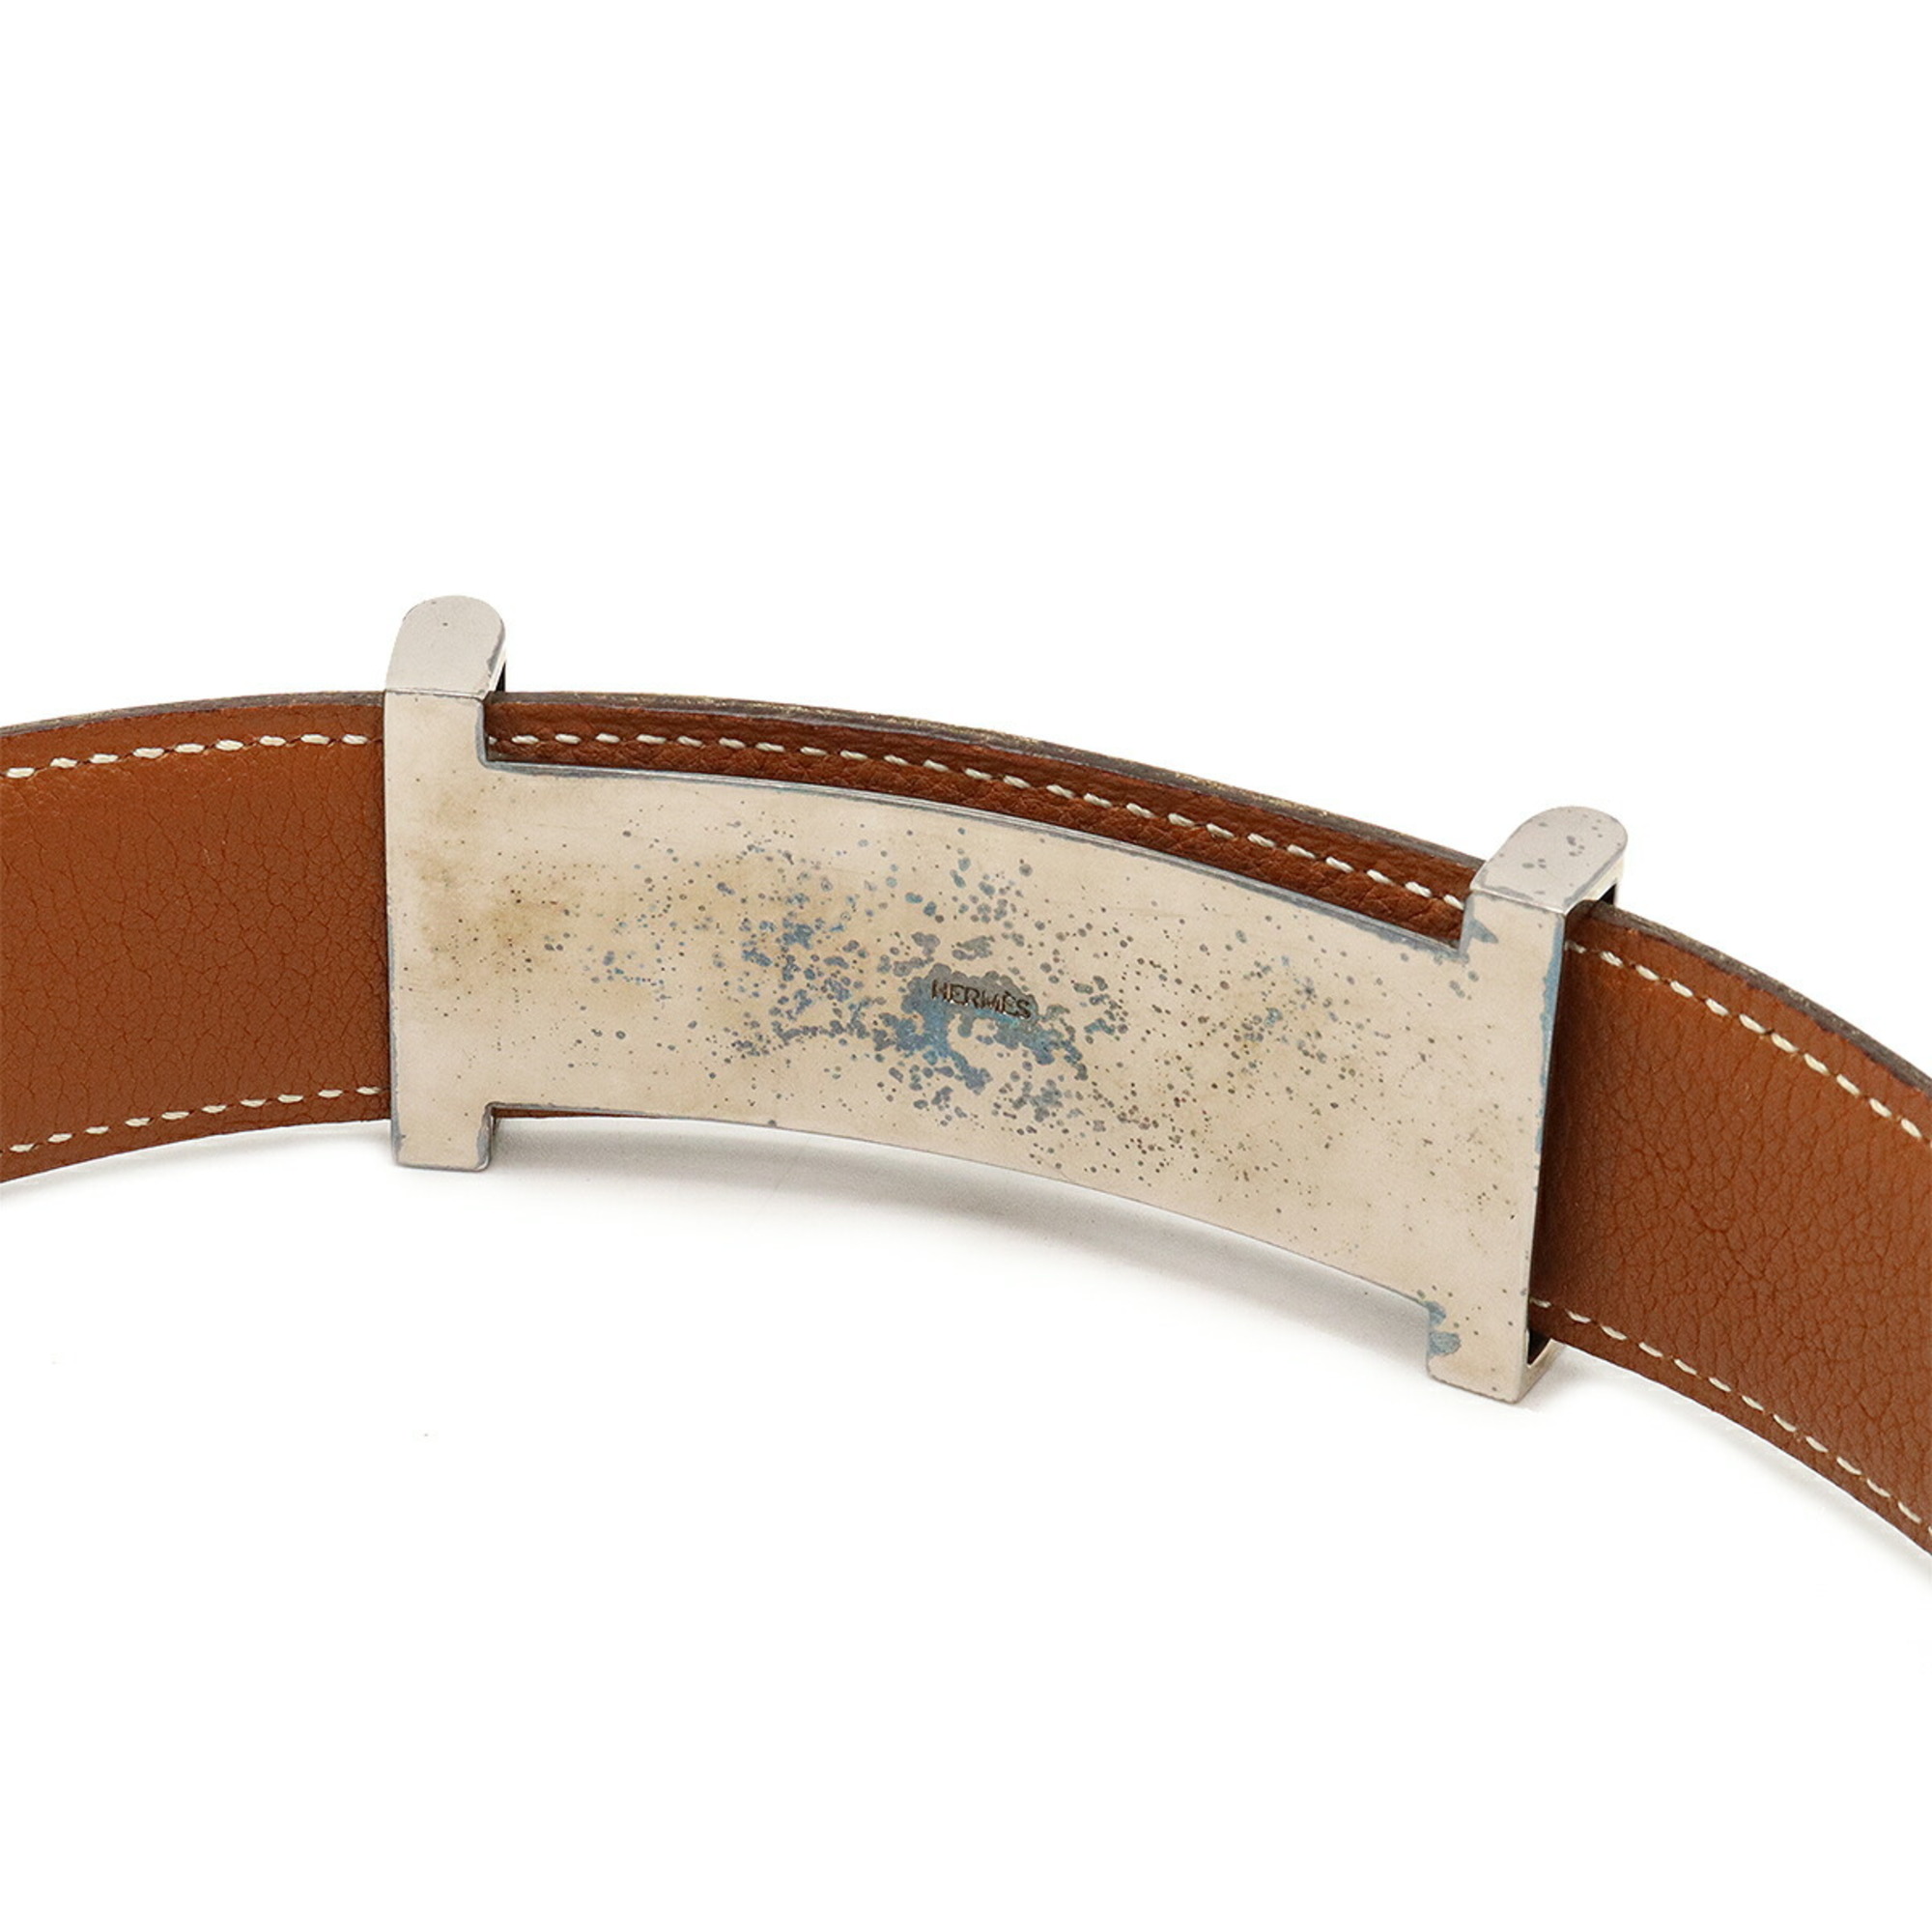 HERMES Reversible belt leather black brown #85 Margiela period □G stamp